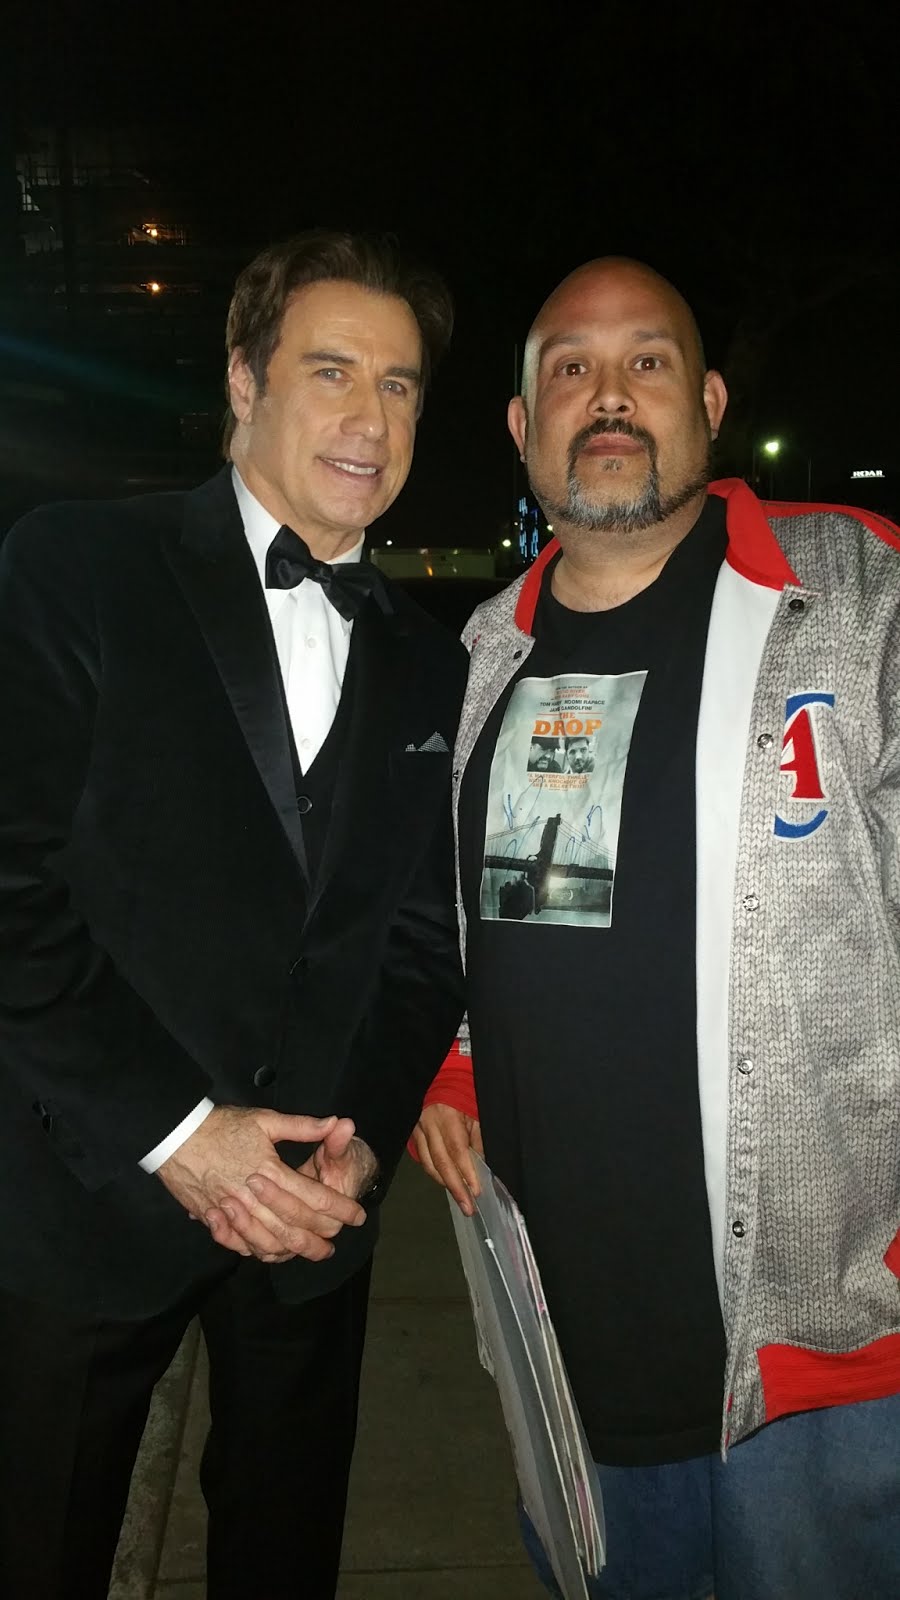 Me and John Travolta